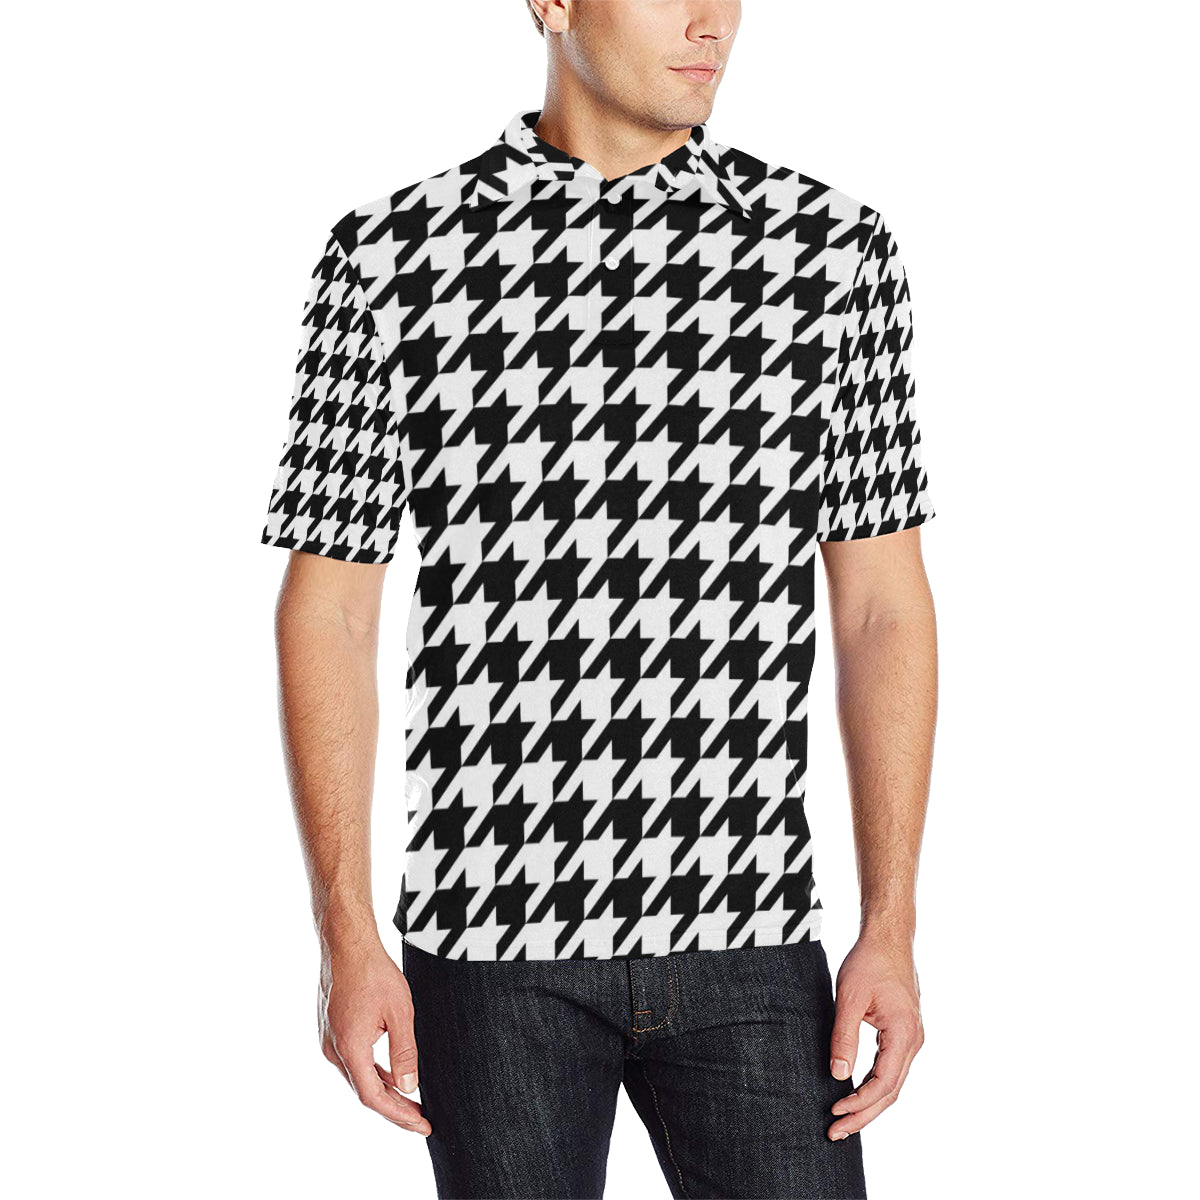 Houndstooth Black White  Pattern Print Design 05 Men Polo Shirt